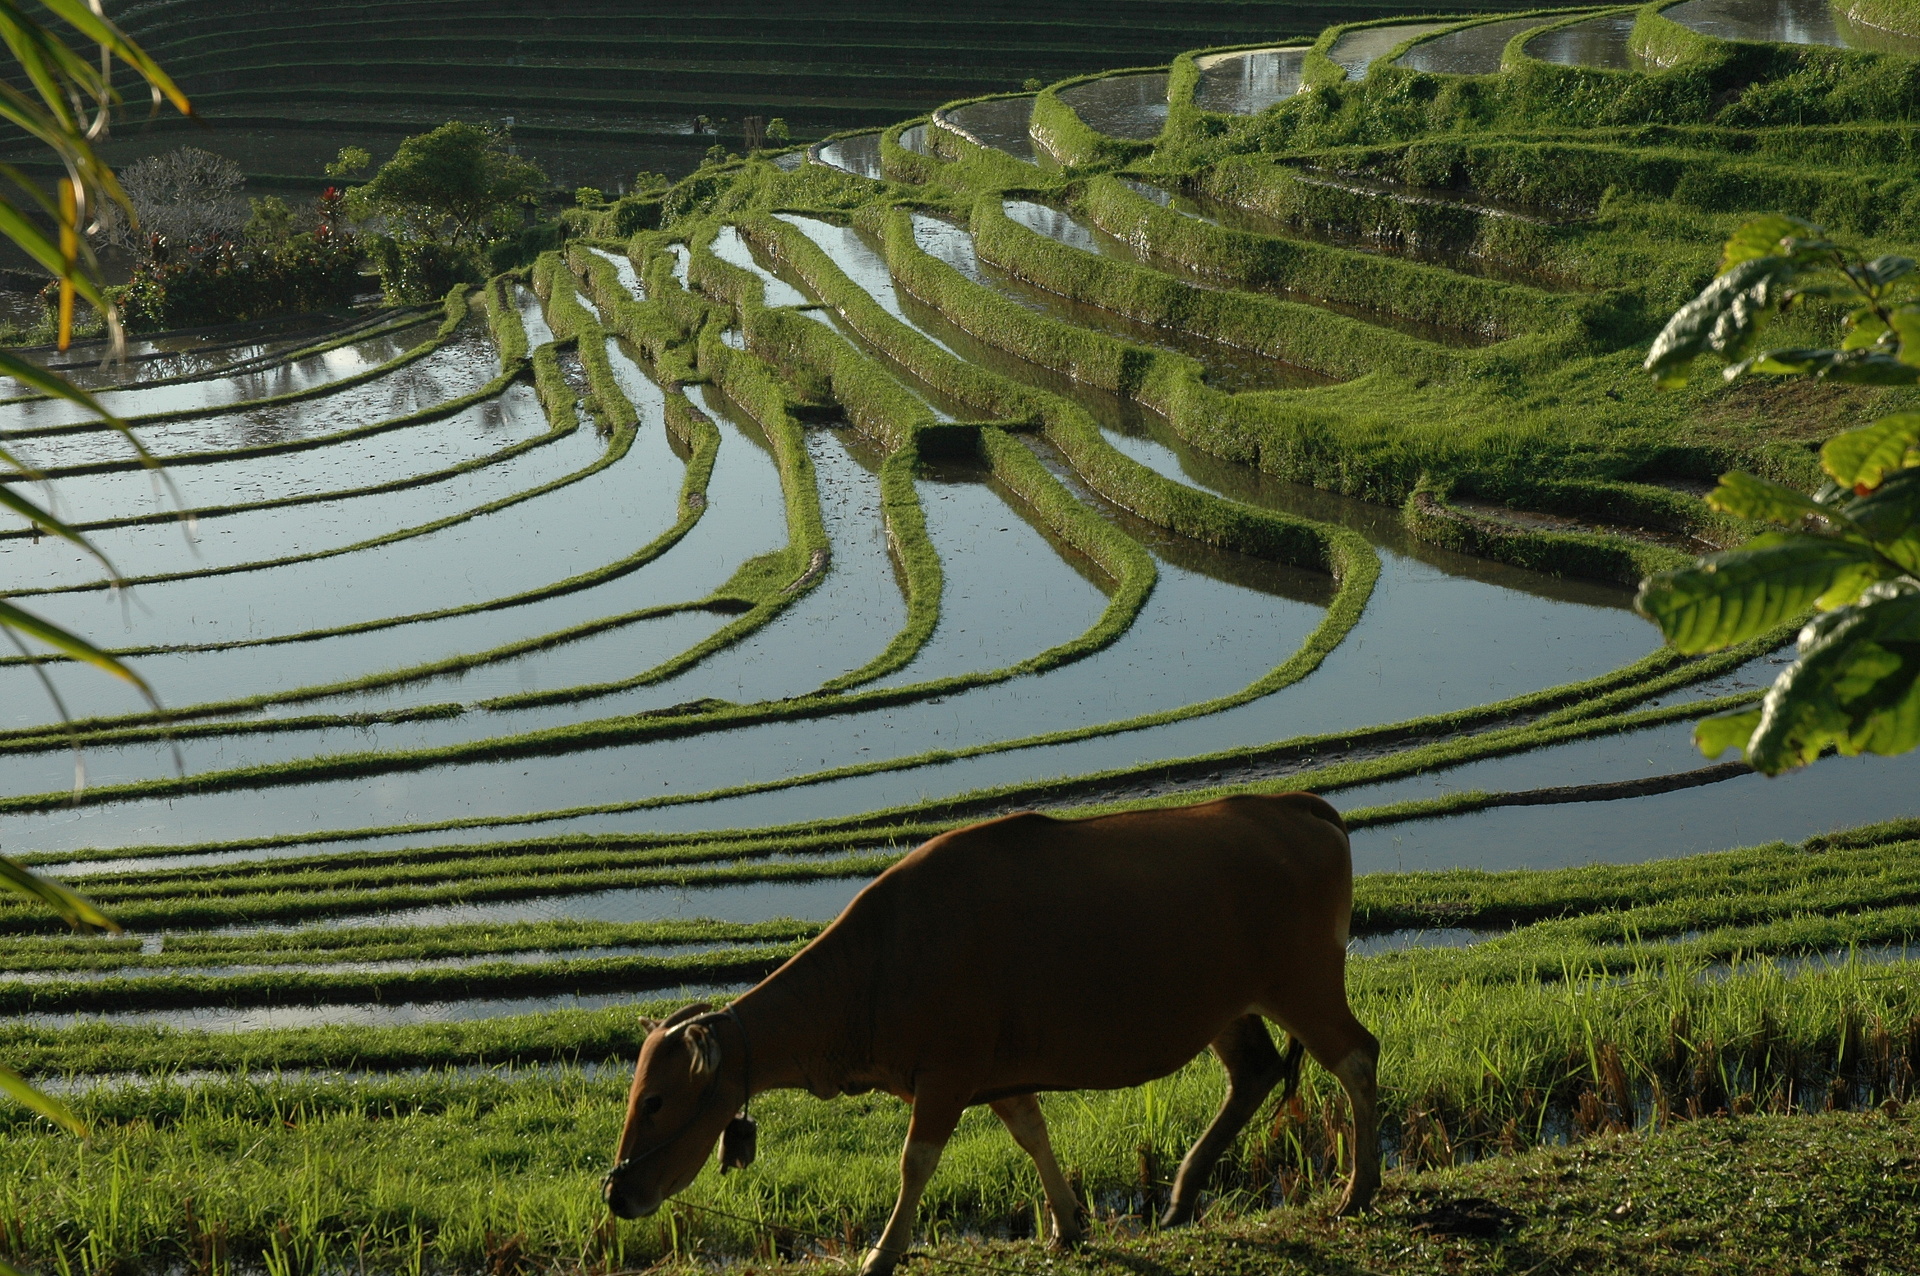  Reisfelder  in Bali  DigitalPHOTO